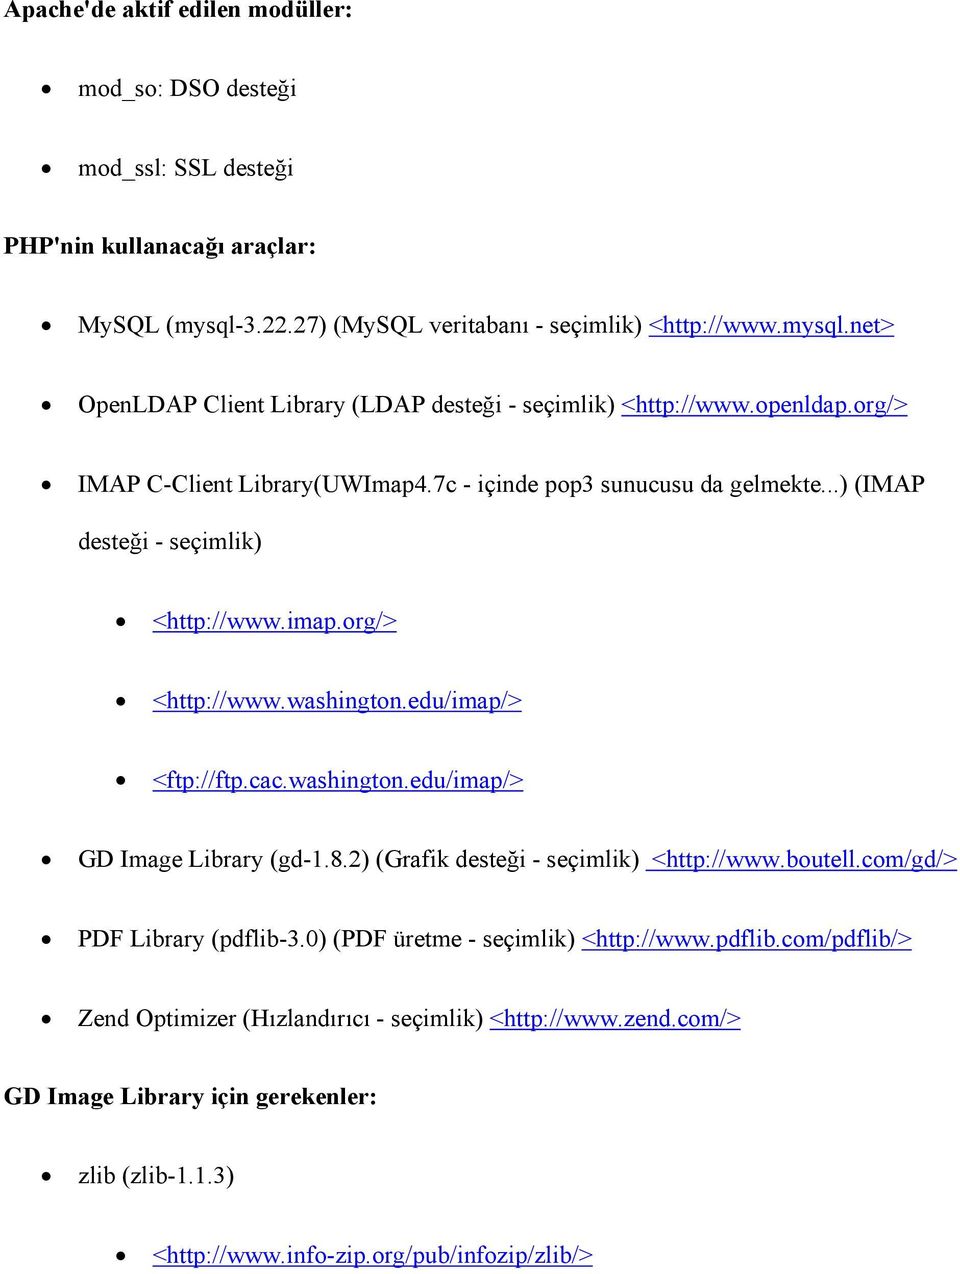 washington.edu/imap/> GD Image Library (gd-1.8.2) (Grafik desteği - seçimlik) <http://www.boutell.com/gd/> PDF Library (pdflib-3.0) (PDF üretme - seçimlik) <http://www.pdflib.com/pdflib/> Zend Optimizer (Hızlandırıcı - seçimlik) <http://www.